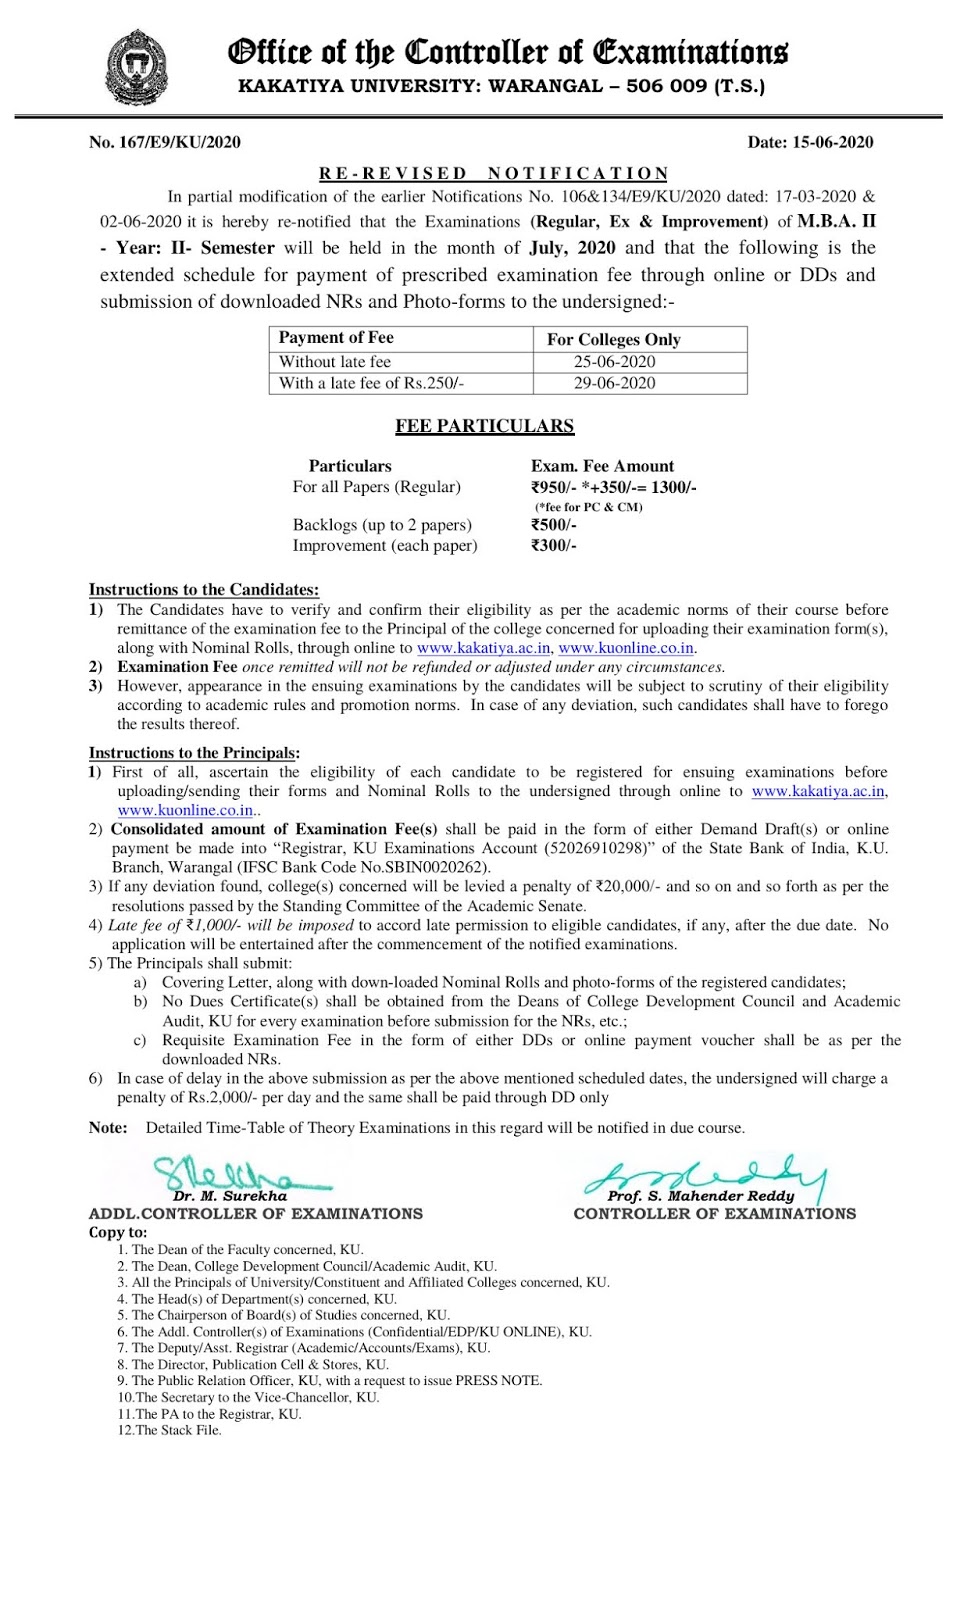 kakatiya university mba 2nd year 2nd sem july 2020 re-revised fee notification